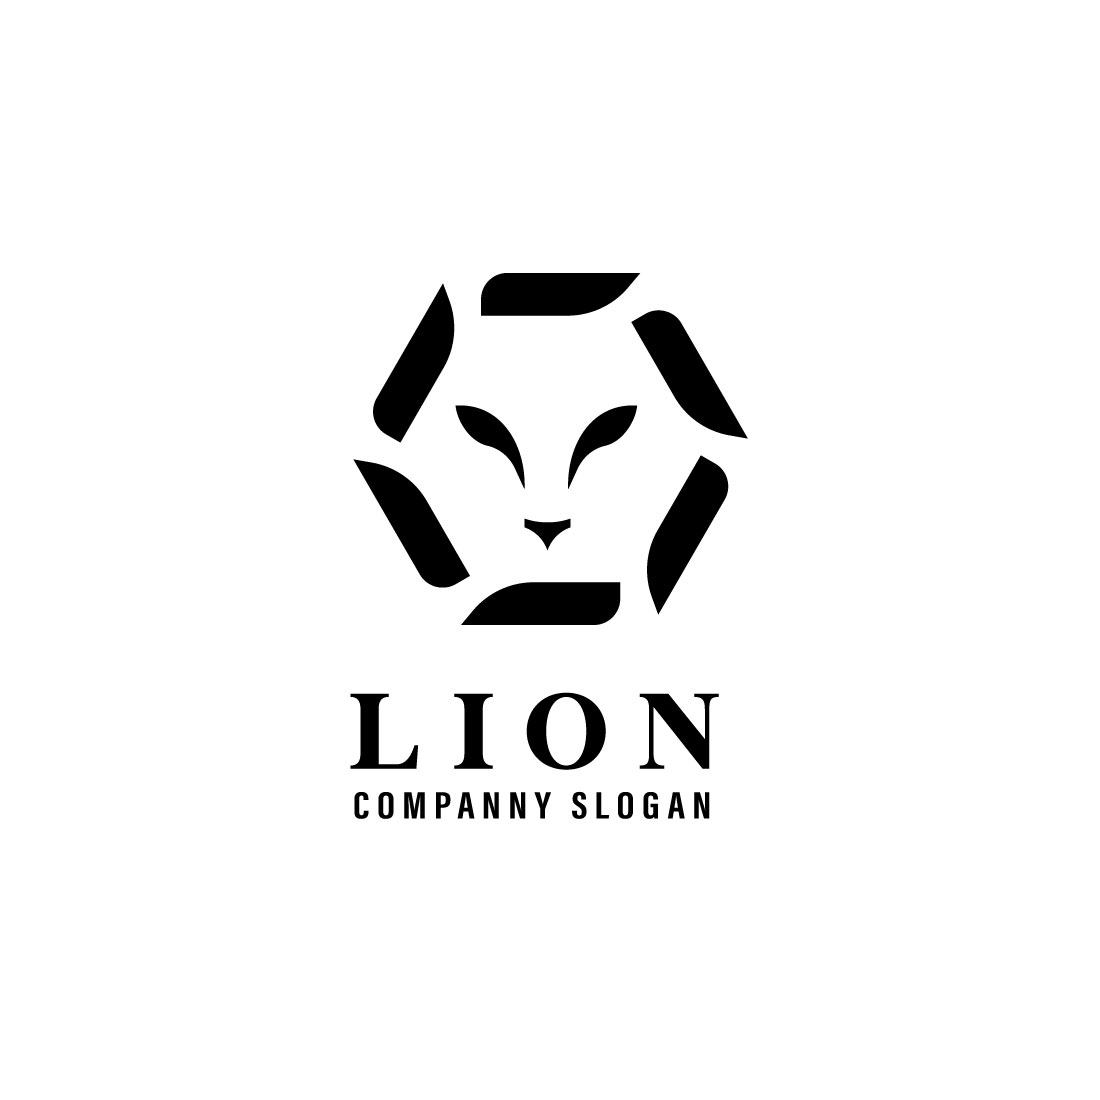 Lion Company Logo cover image.